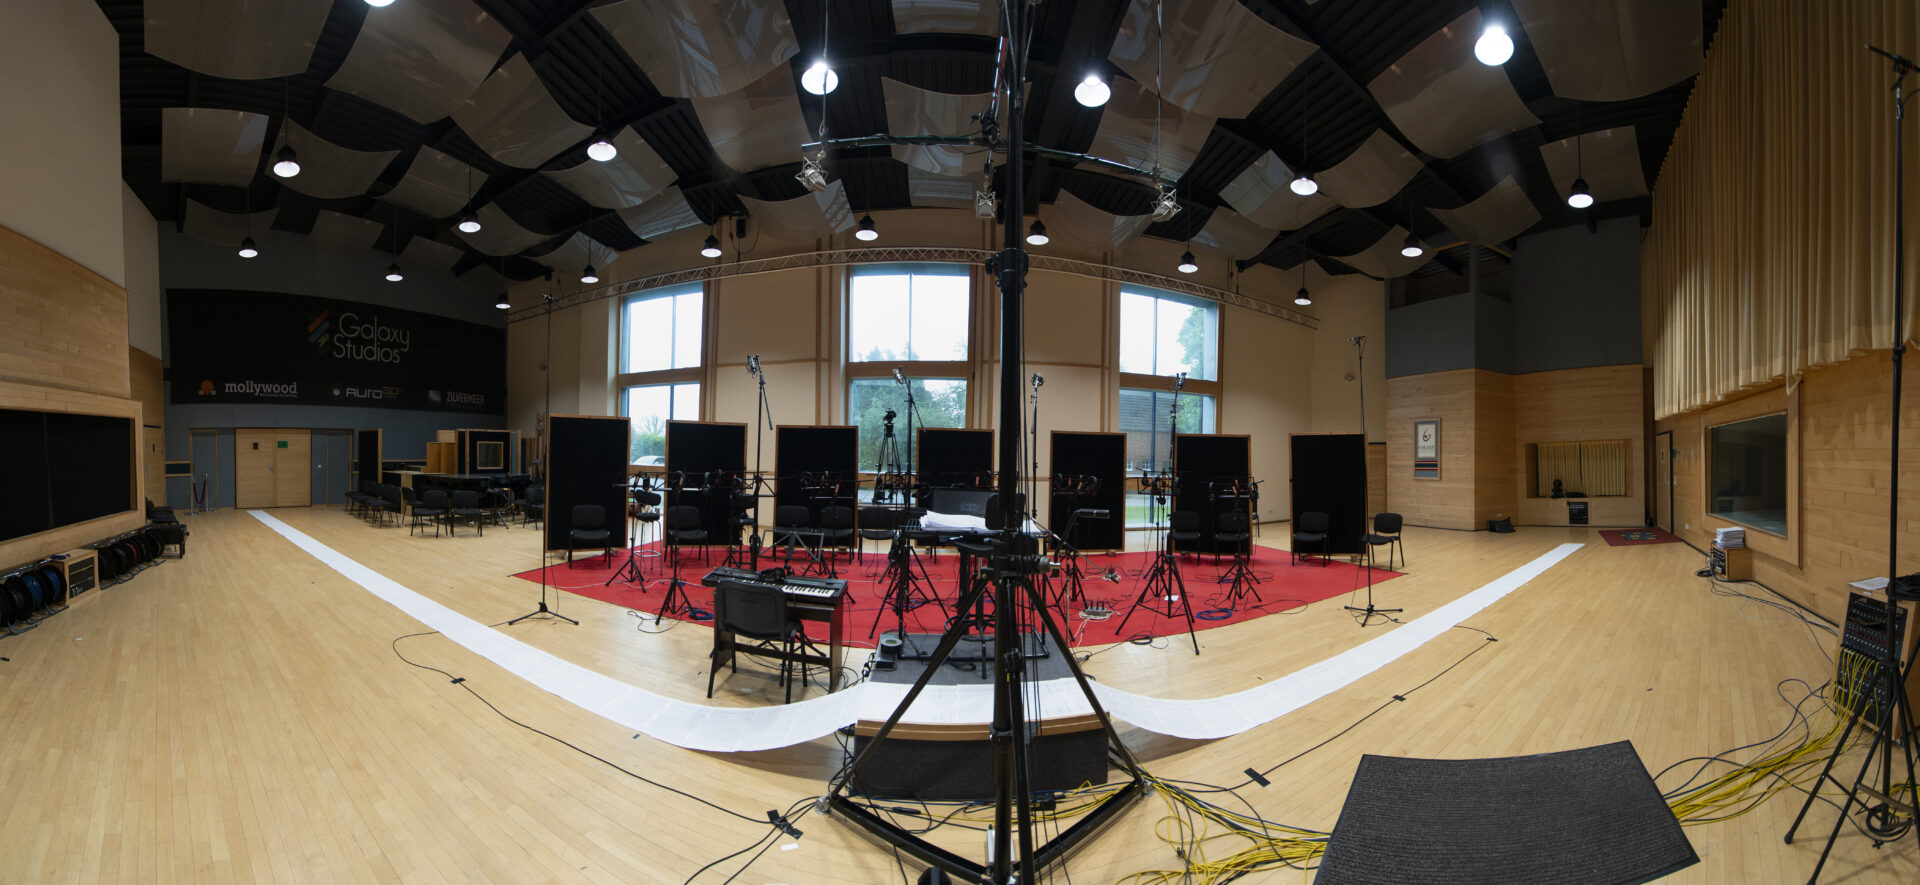 Redbad film score recording session Galaxy Studios 2